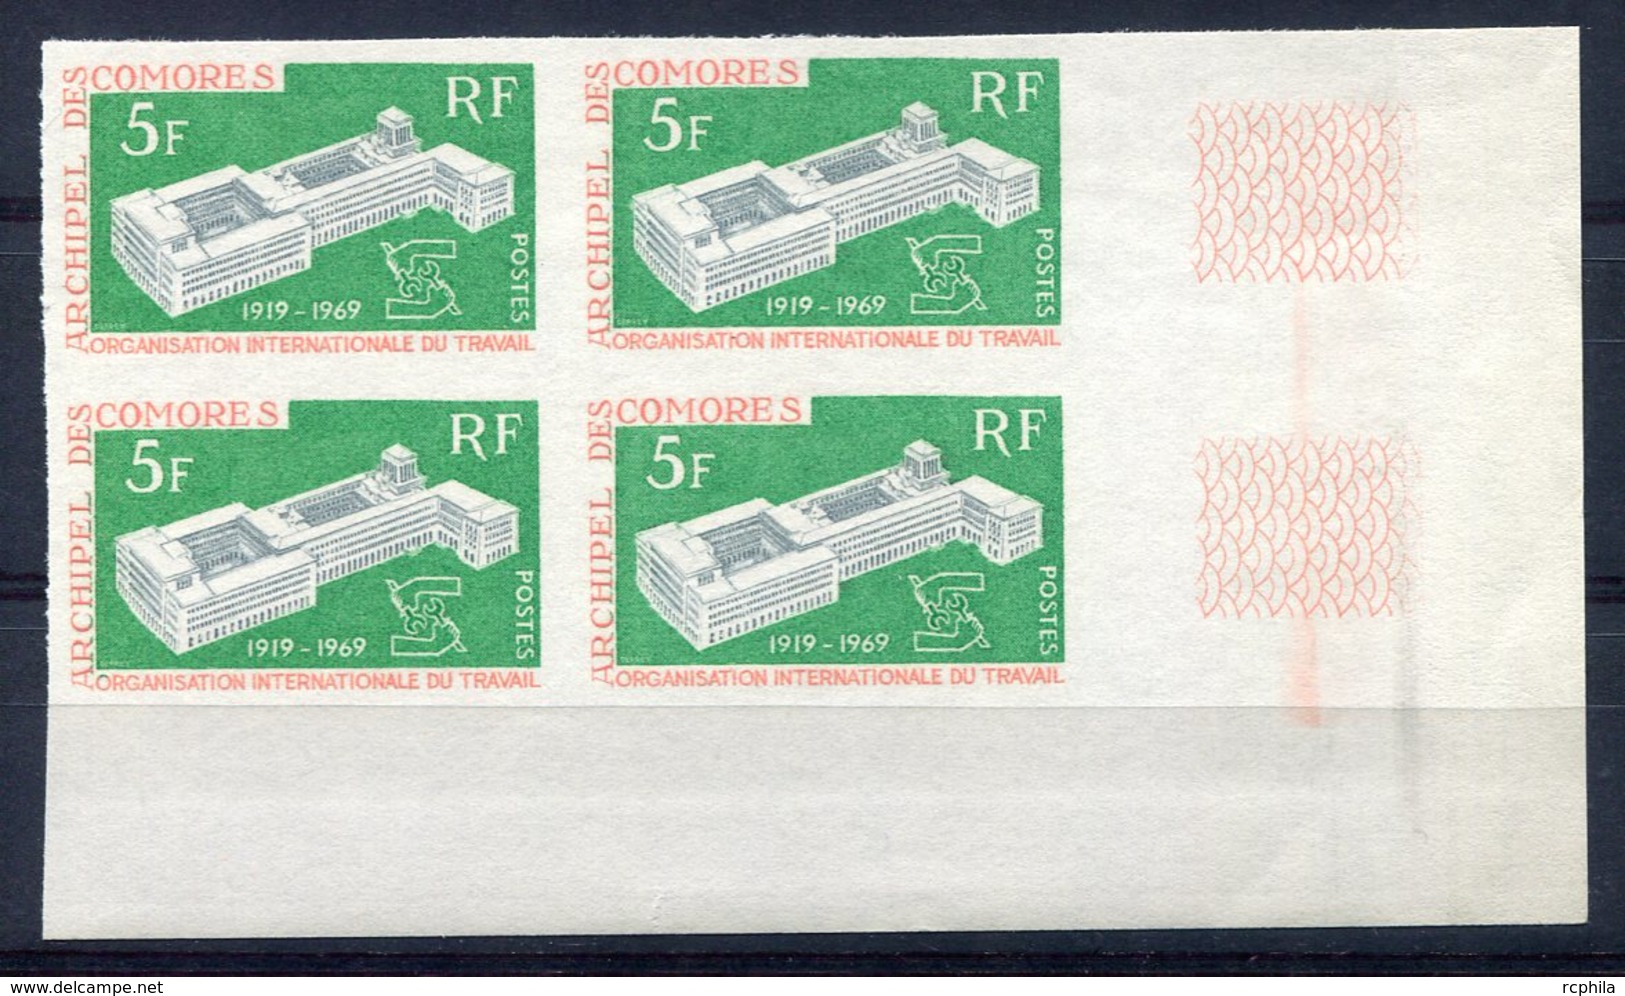 RC 15484 COMORES N° 55 O.I.T BLOC DE 4 NON DENTELÉ COIN DE FEUILLE NEUF ** MNH TB - Unused Stamps